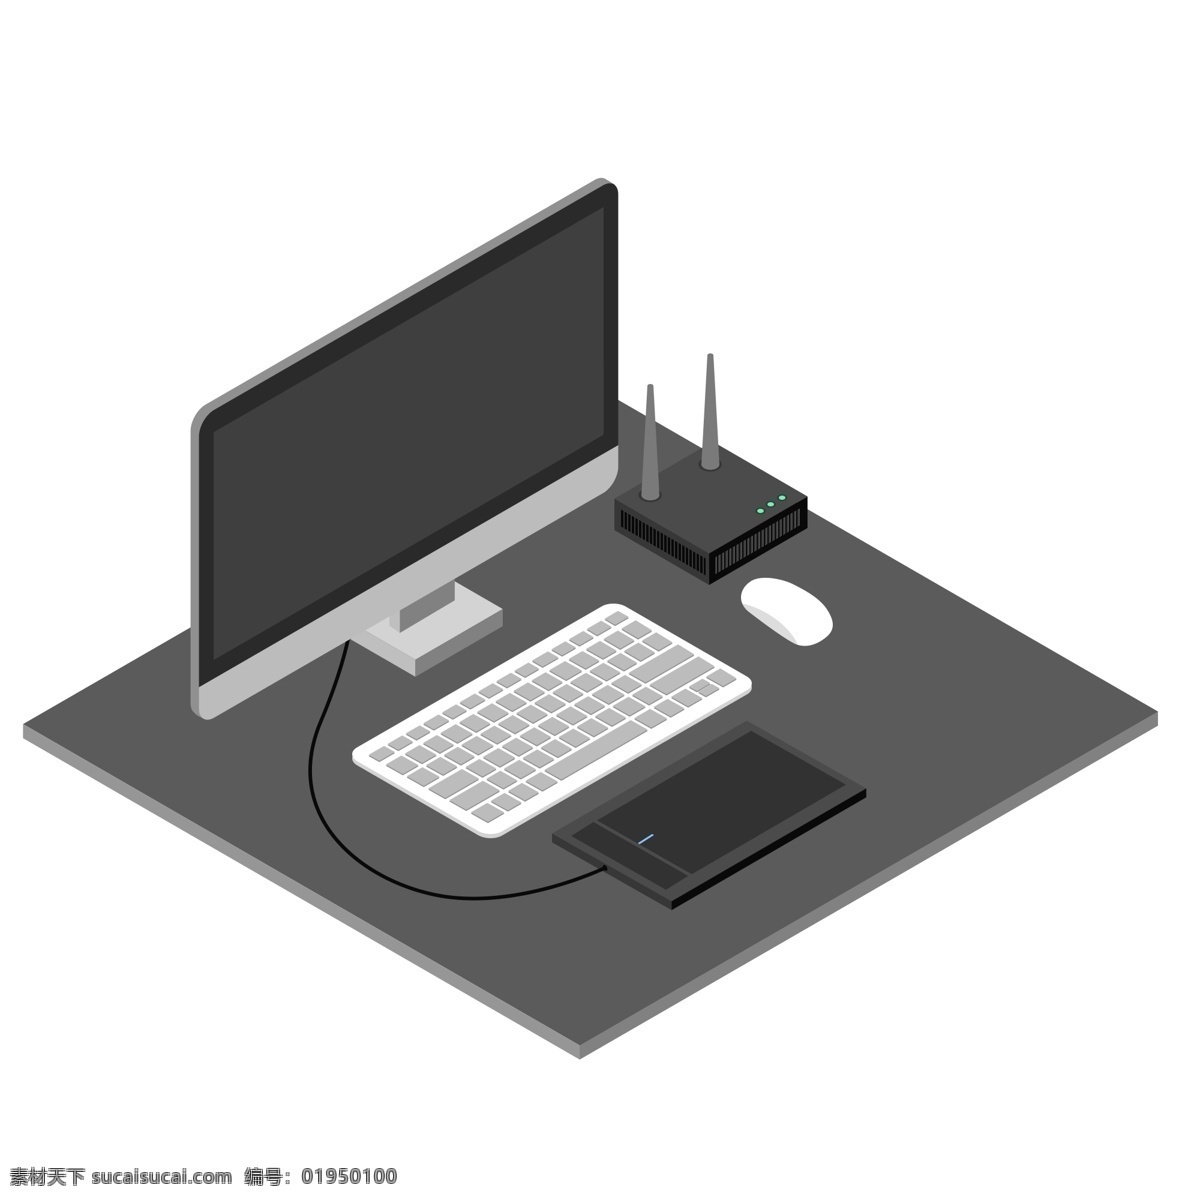 d 立体 商务 办公设备 元素 商用 办公 电脑 鼠标 25d 设备 路由器 键盘 手绘板 数据线